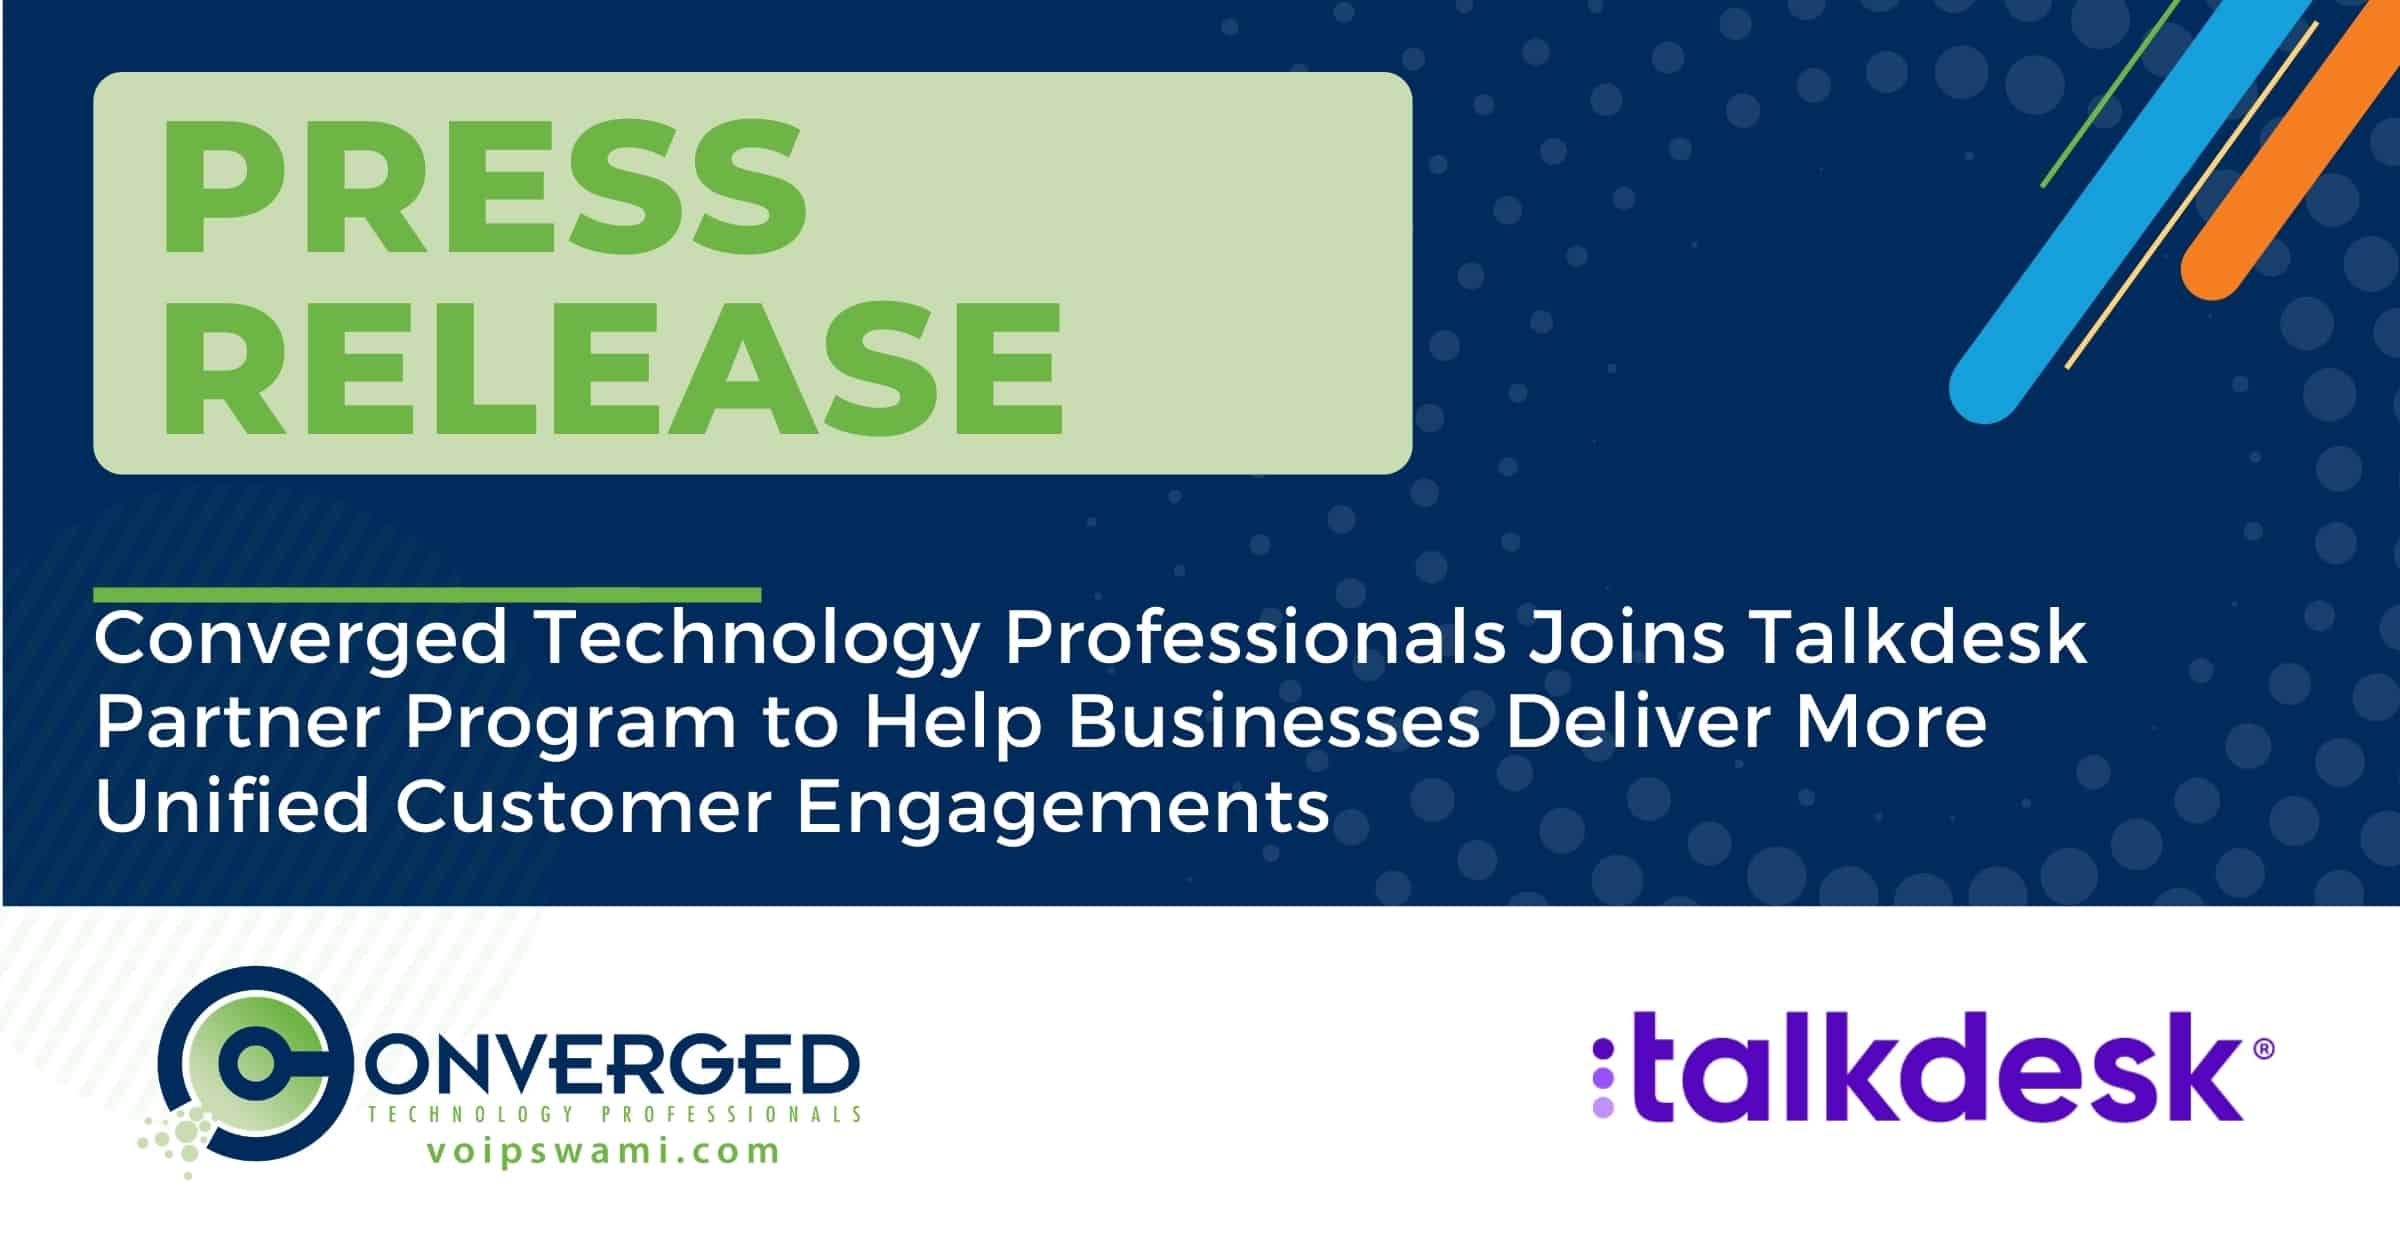 Press Release - Talkdesk Partner